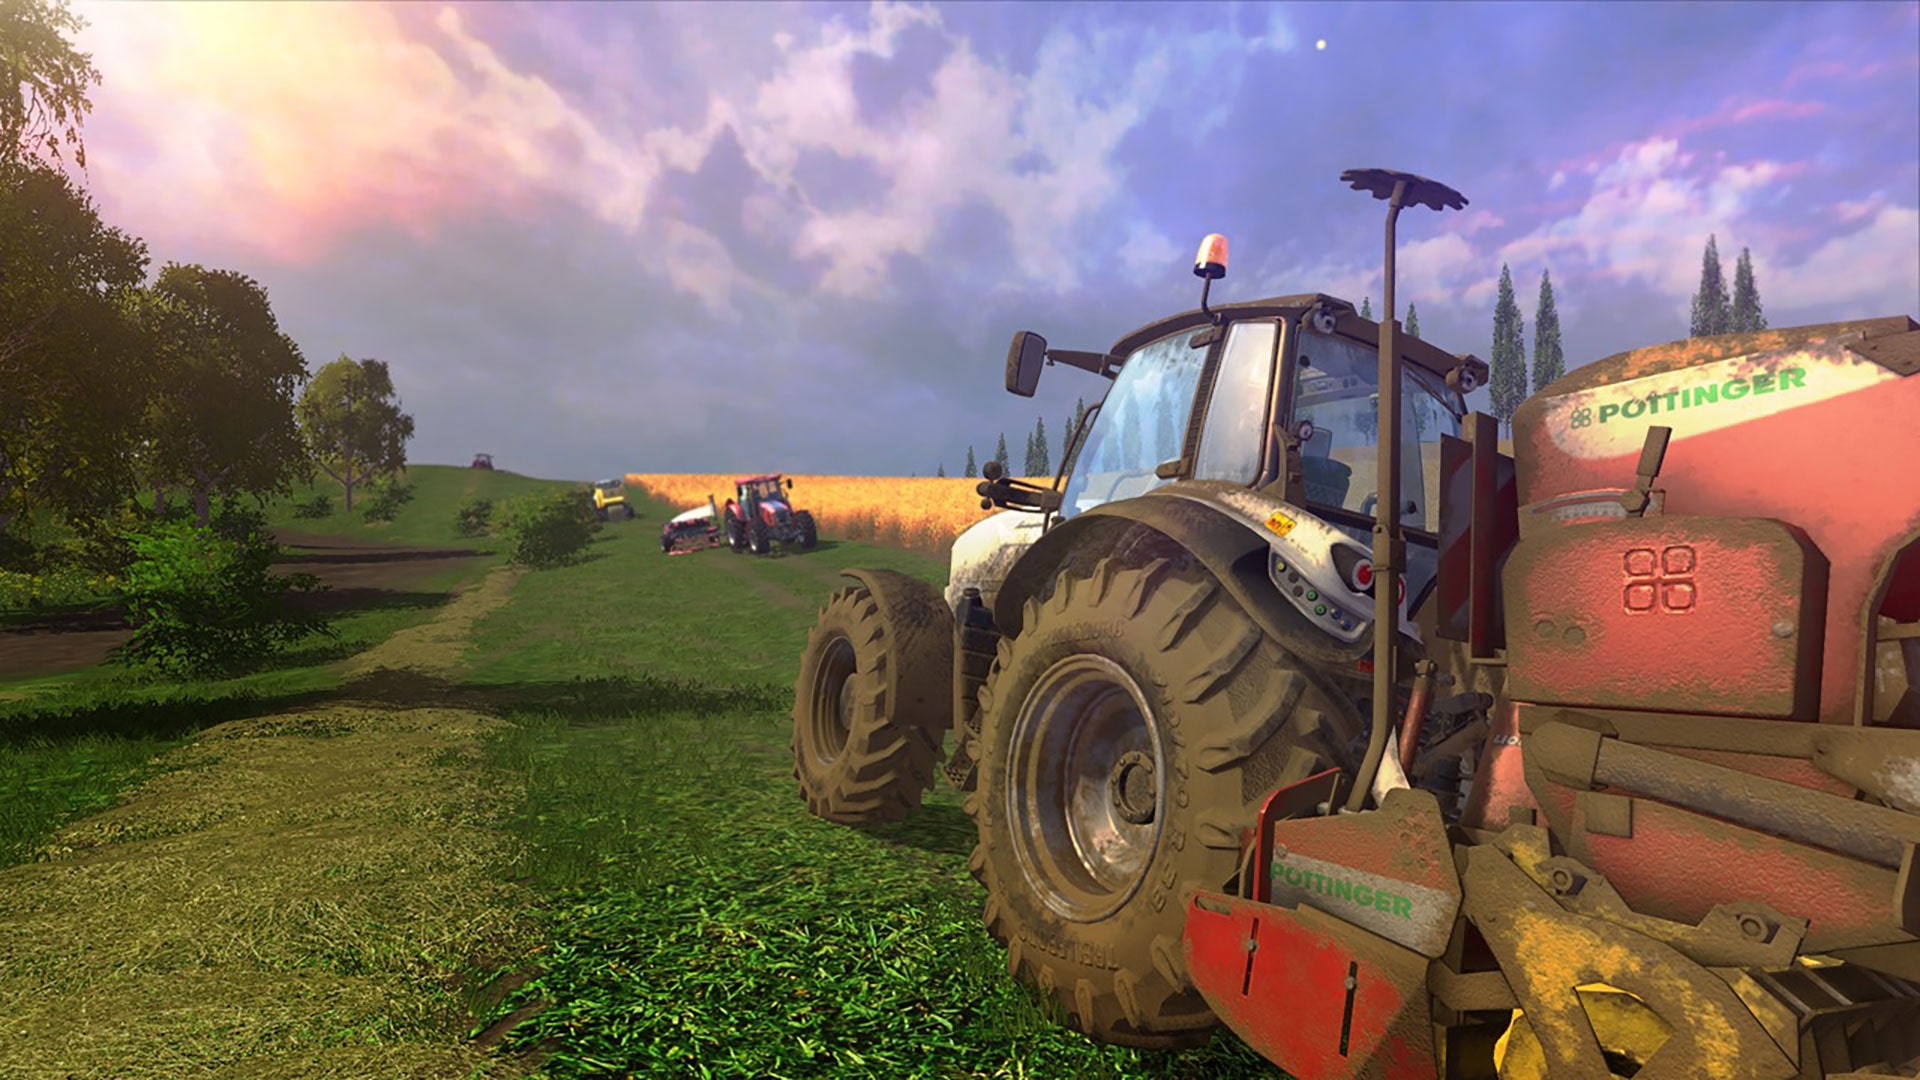 Farming Simulator 15 Fan Pack - Volant PC - Garantie 3 ans LDLC